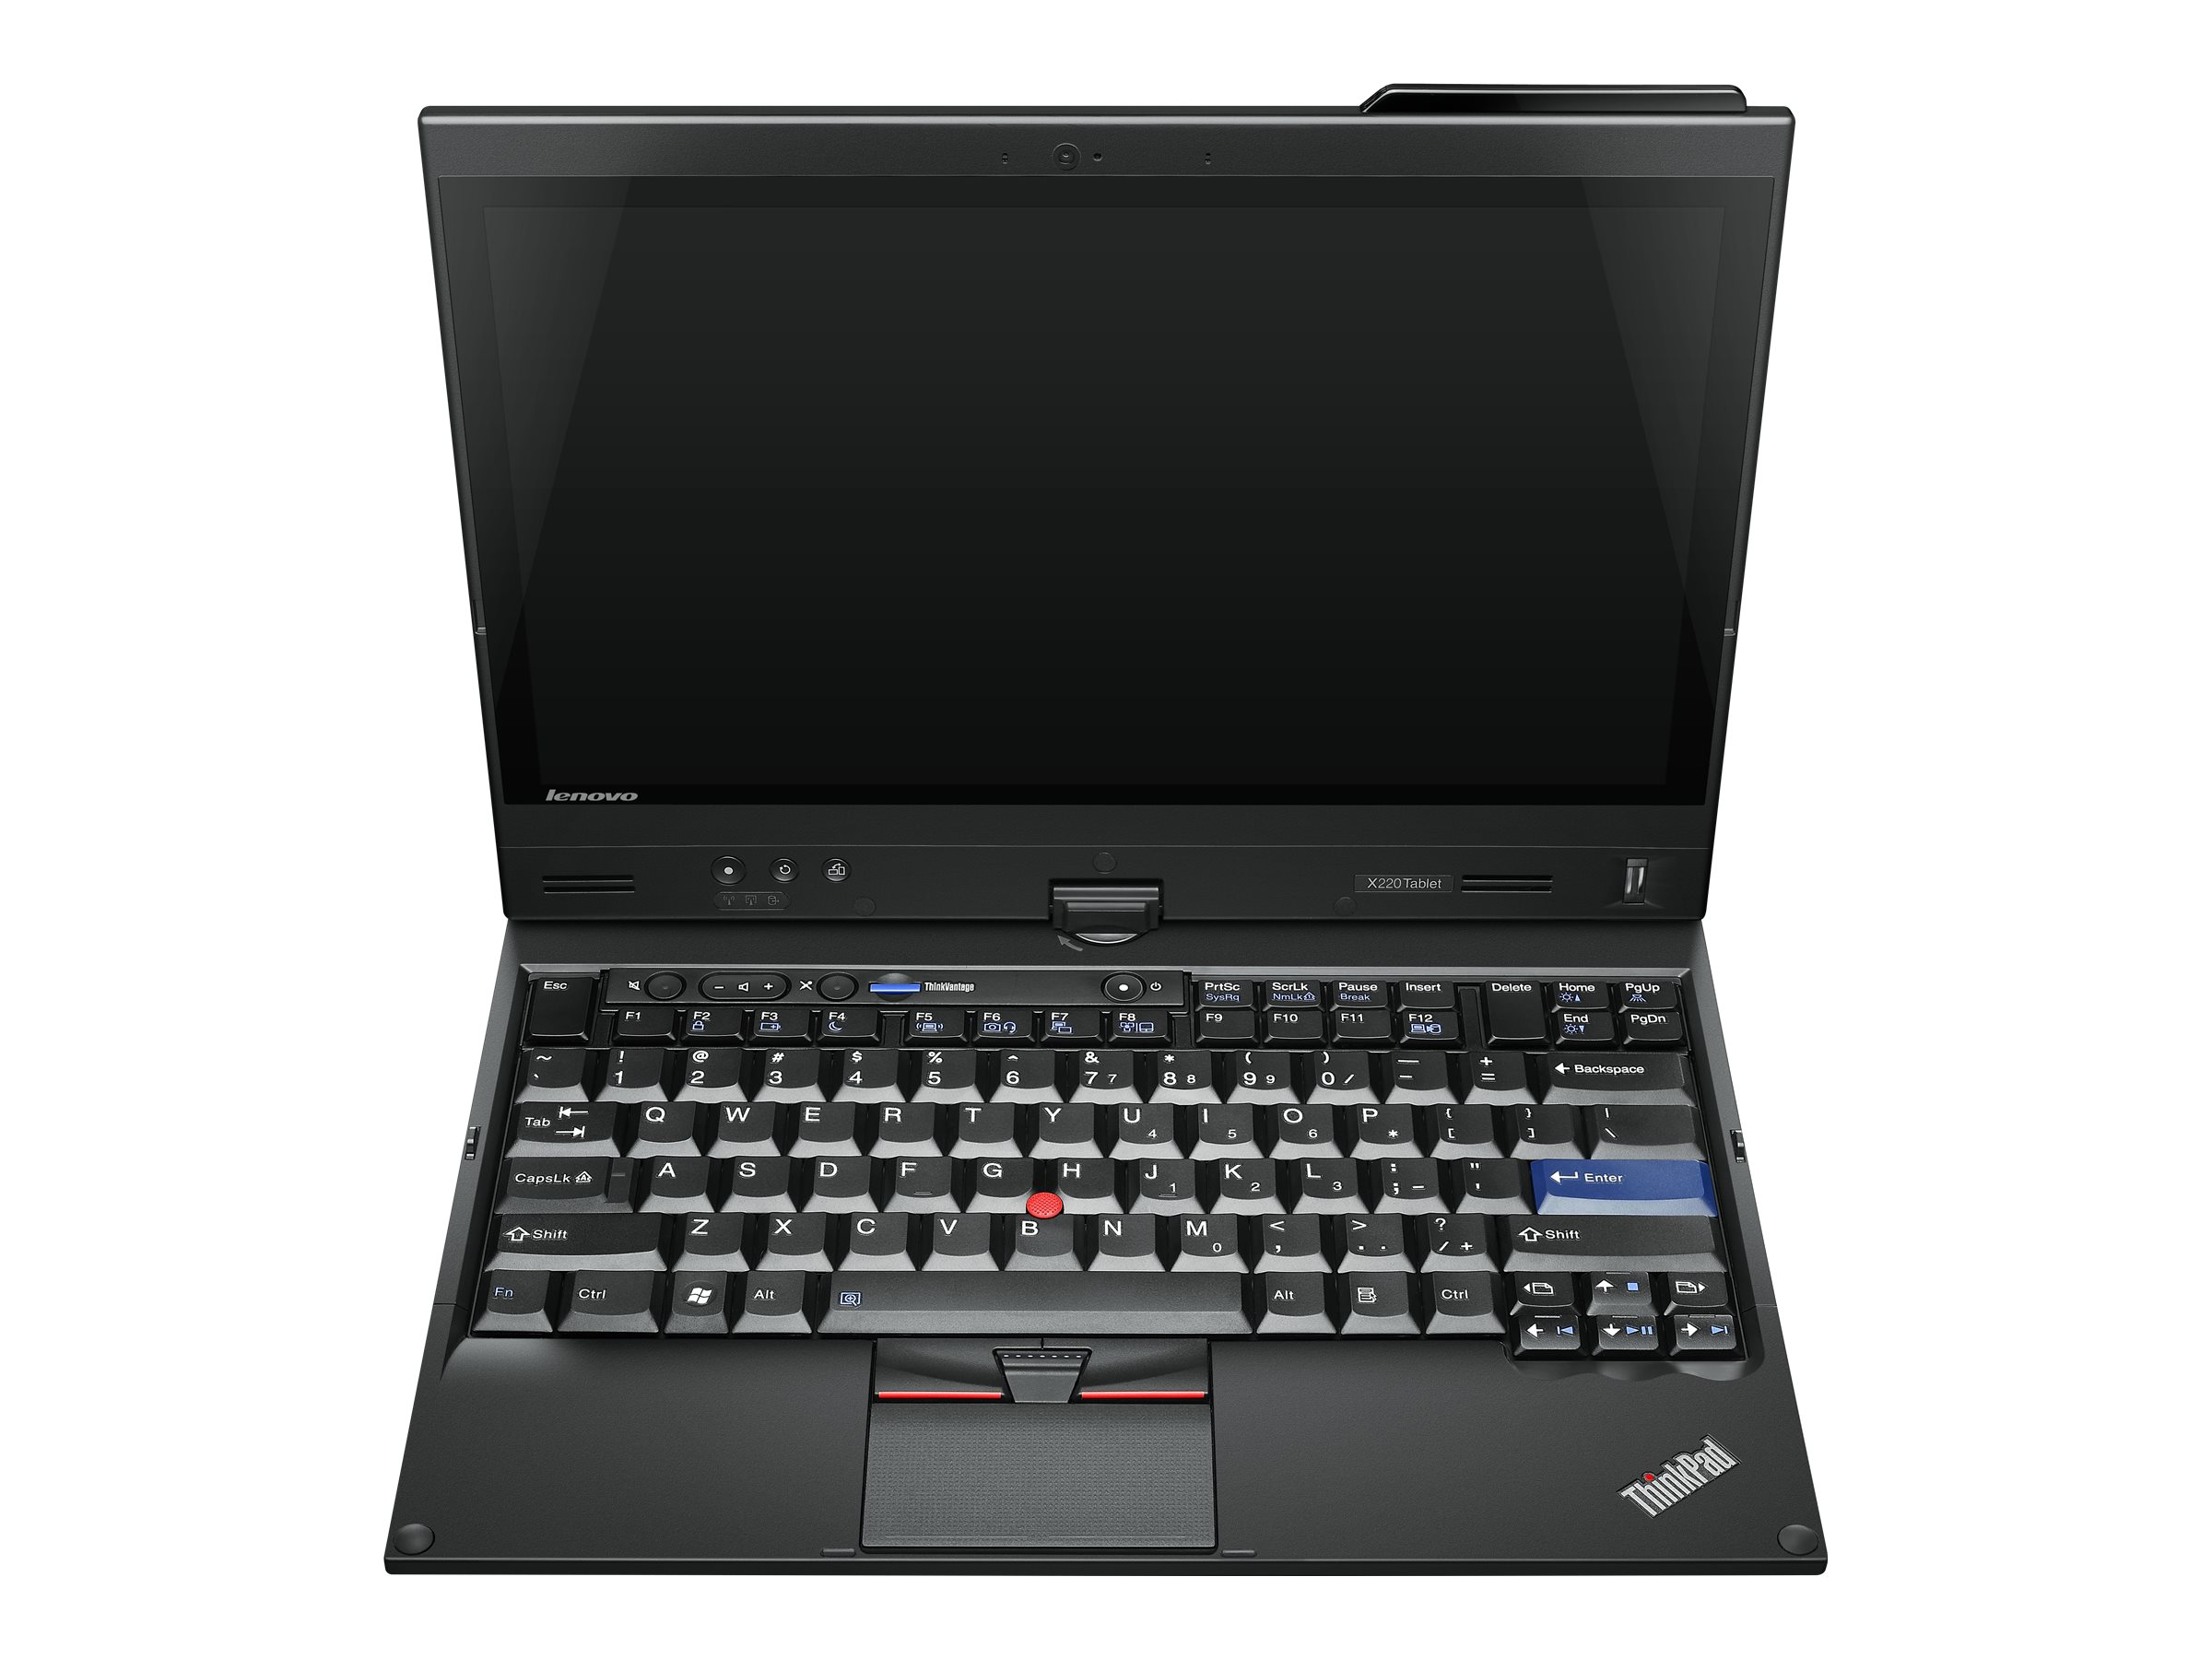 Lenovo ThinkPad X220 Tablet (4298)